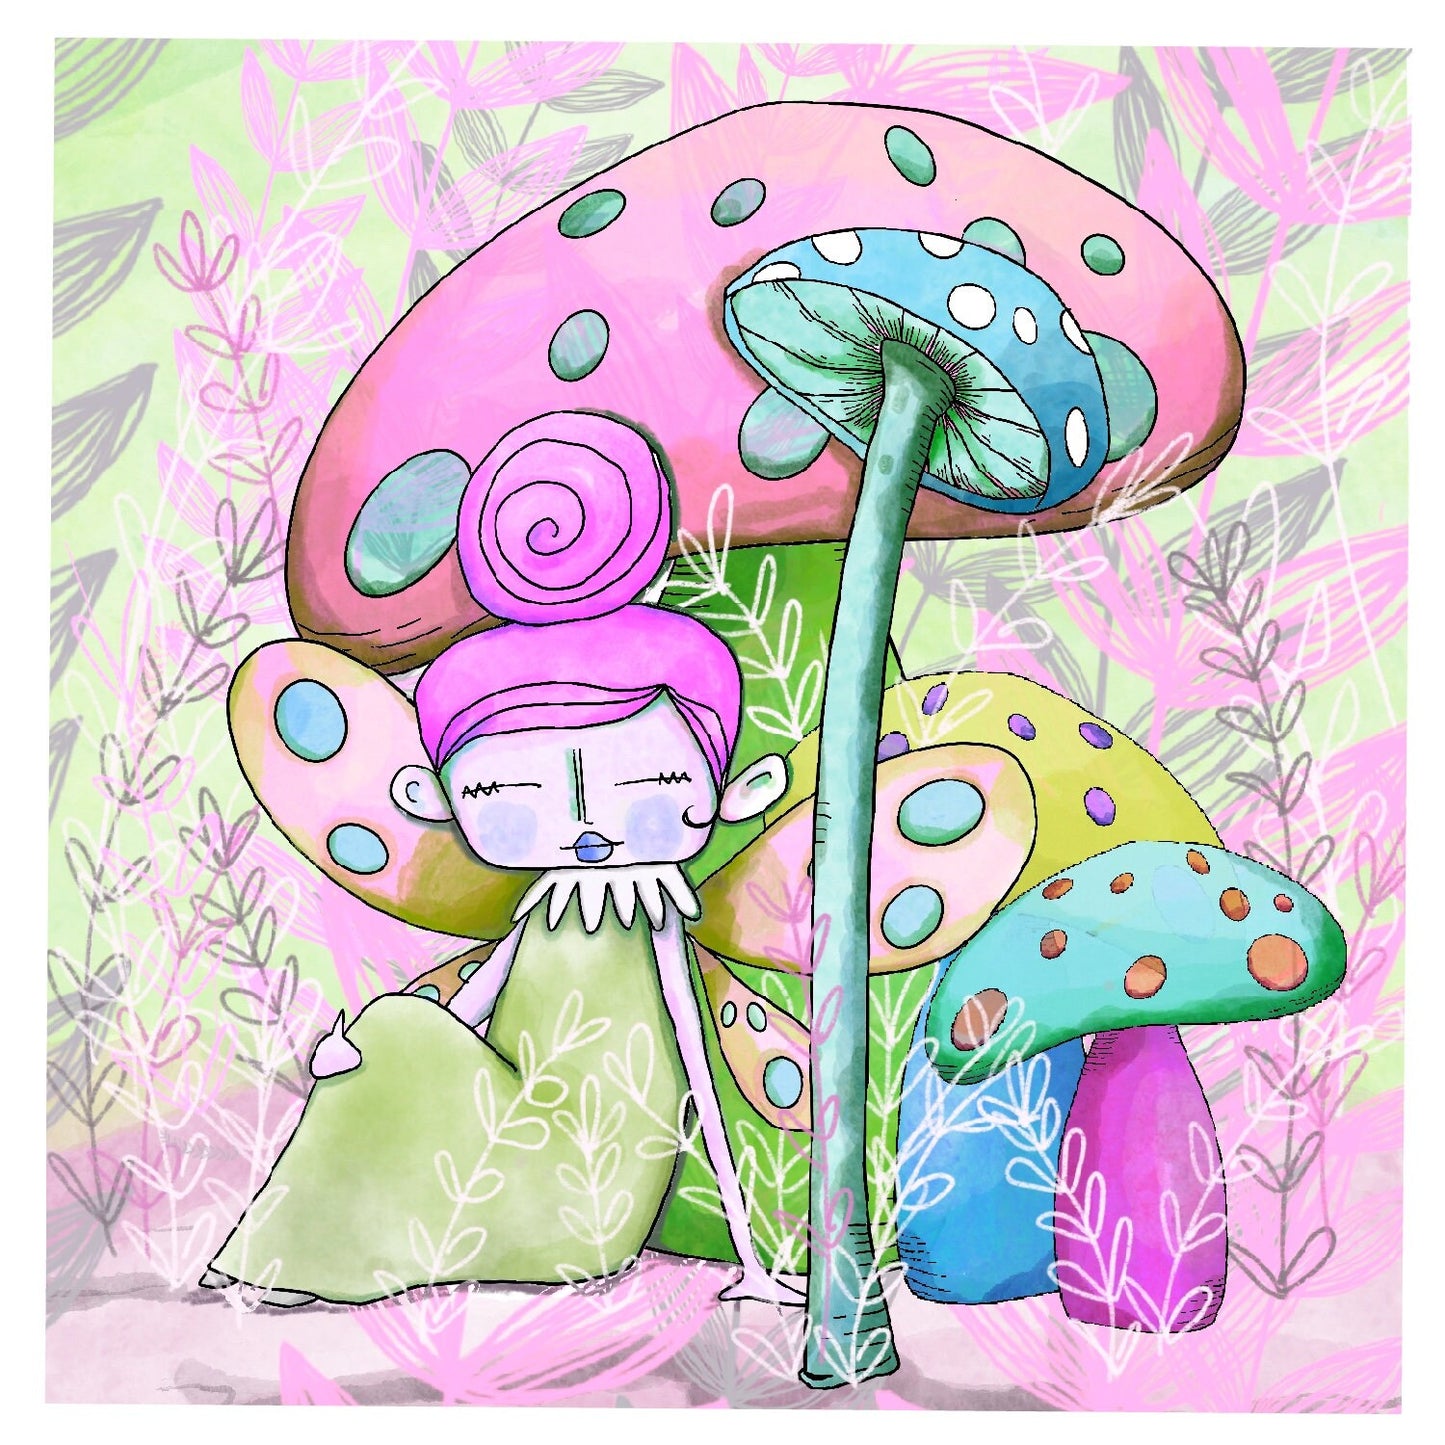 Fairy Mushrooms - 6 digi stamps in PNG and JPG files